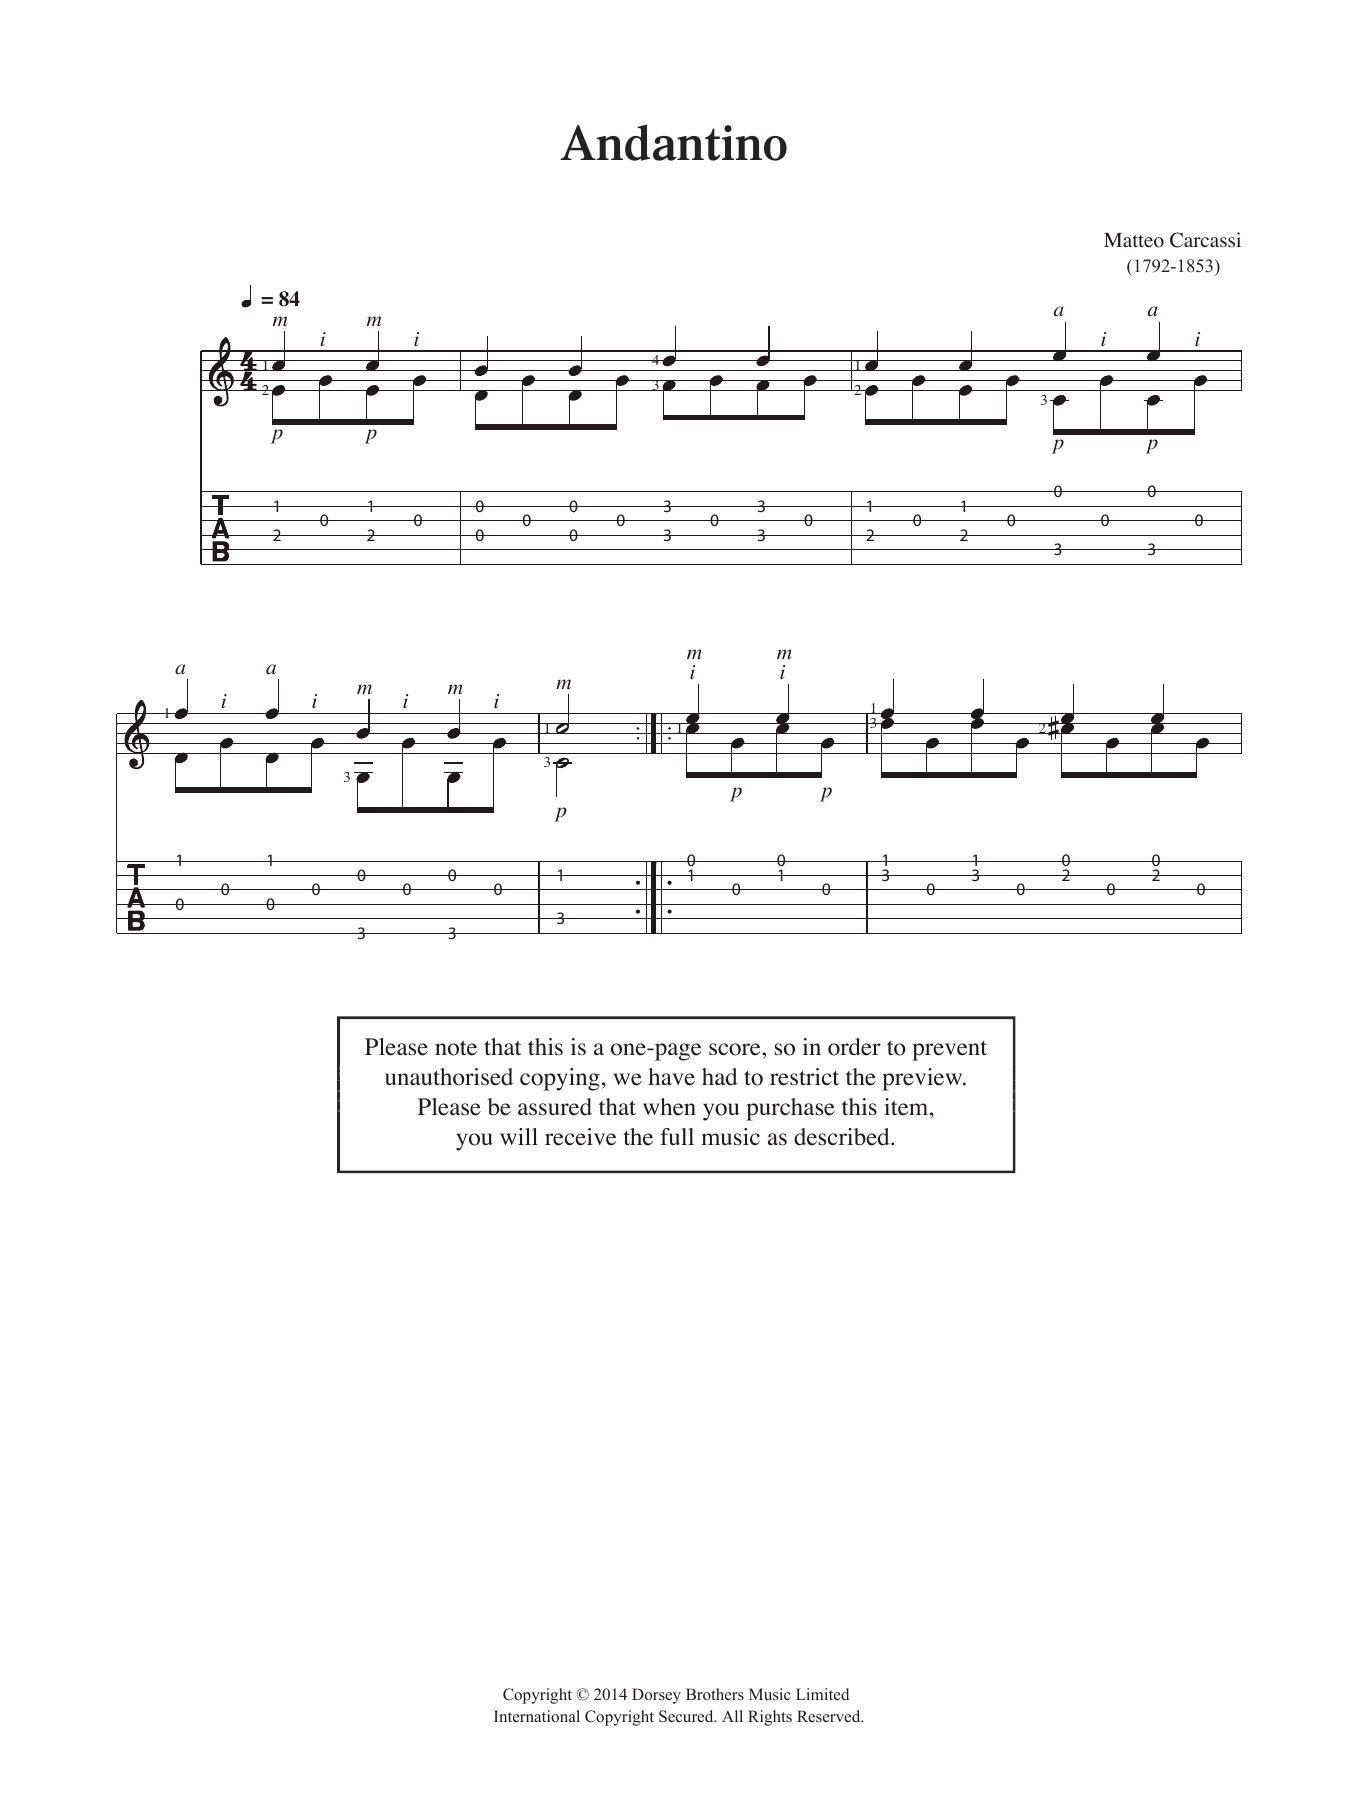 Matteo Carcassi Andantino Sheet Music Notes & Chords for Guitar - Download or Print PDF